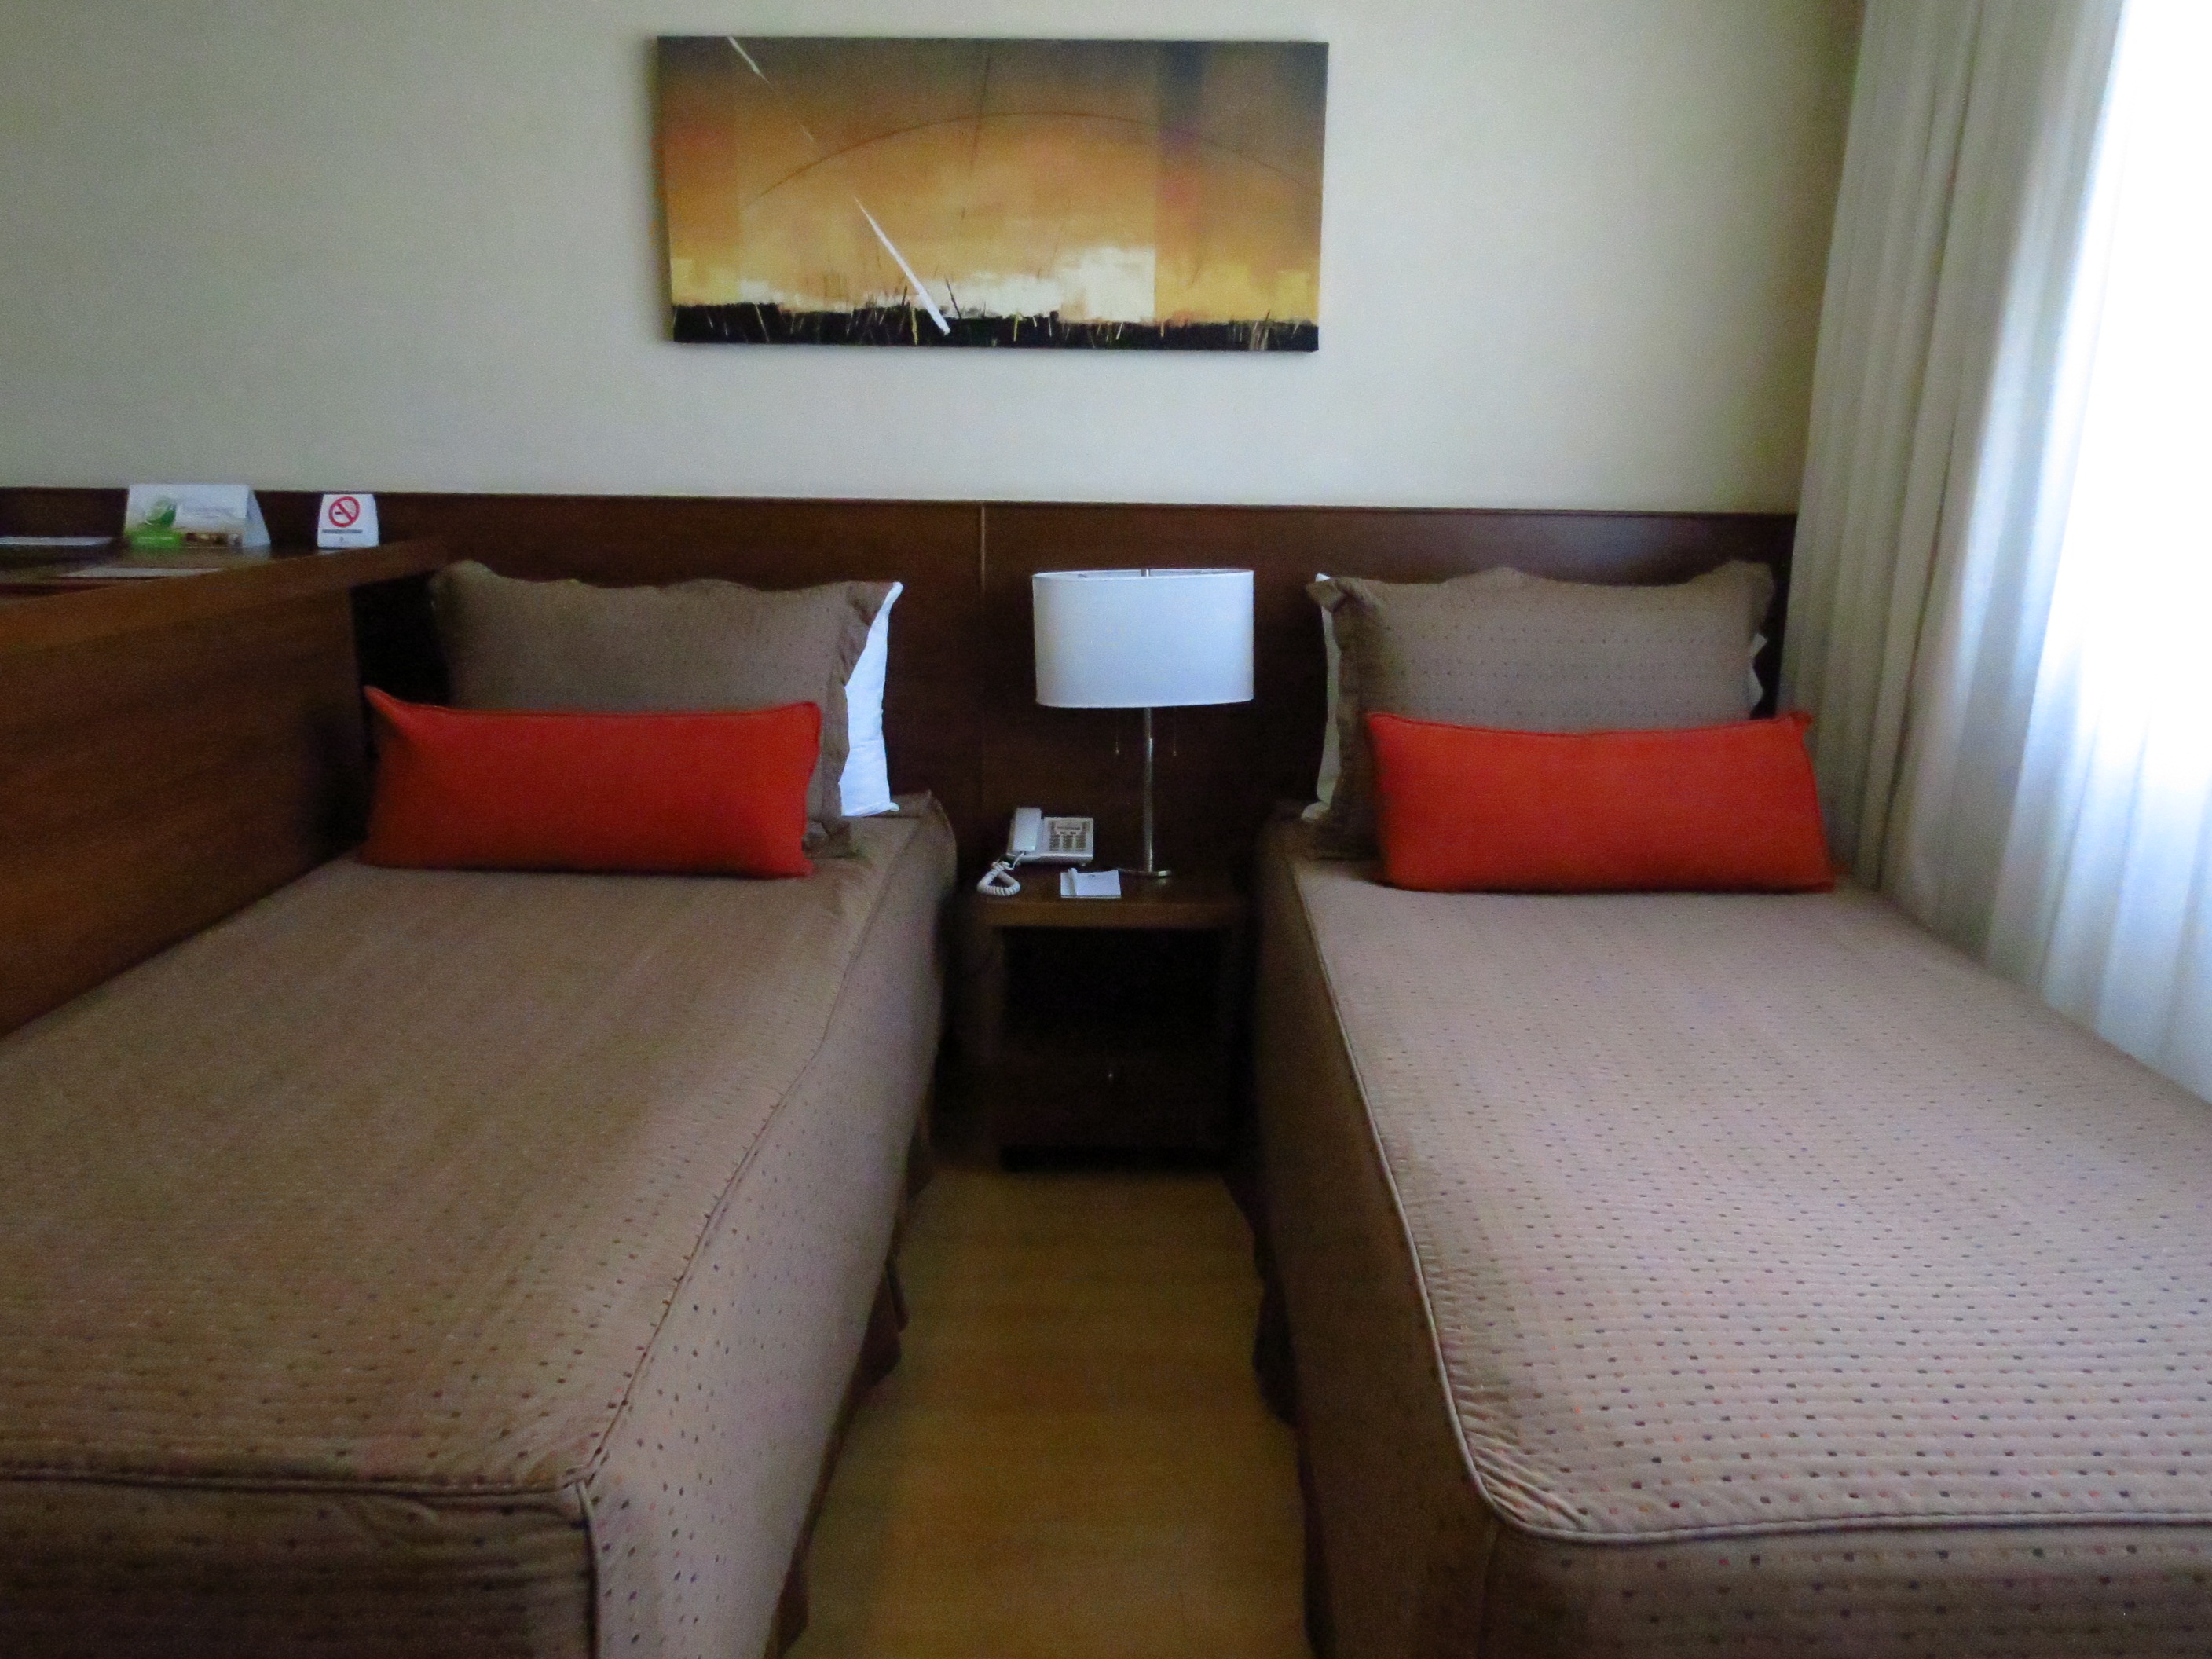 Palermo Suites Hotel & Apartments